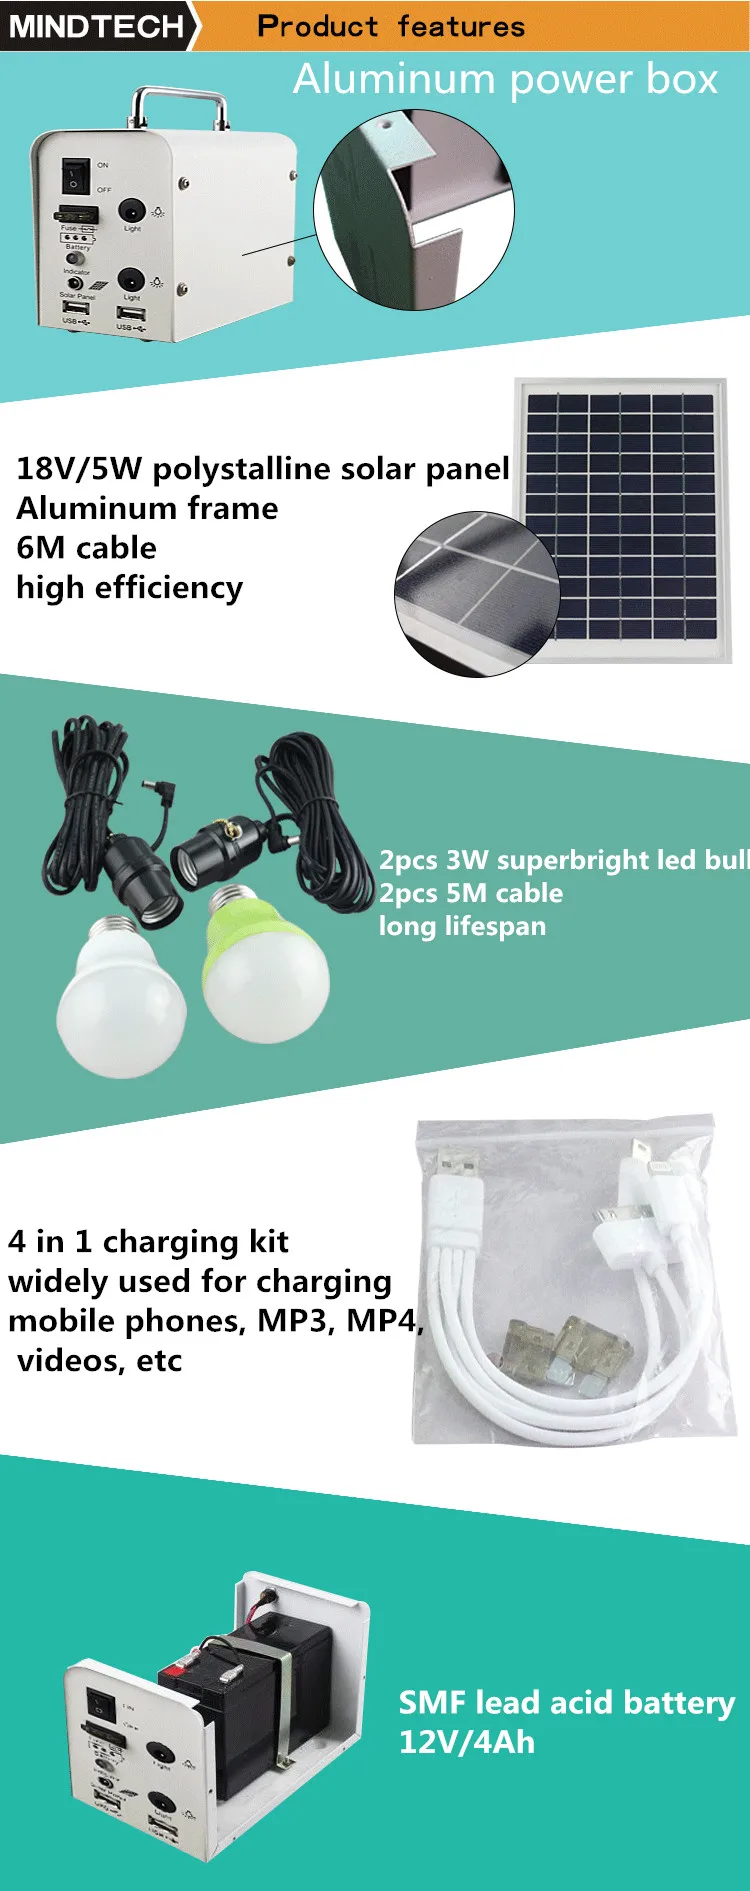 mindtech 5w 10w 20w small solar power lighting kits for small home